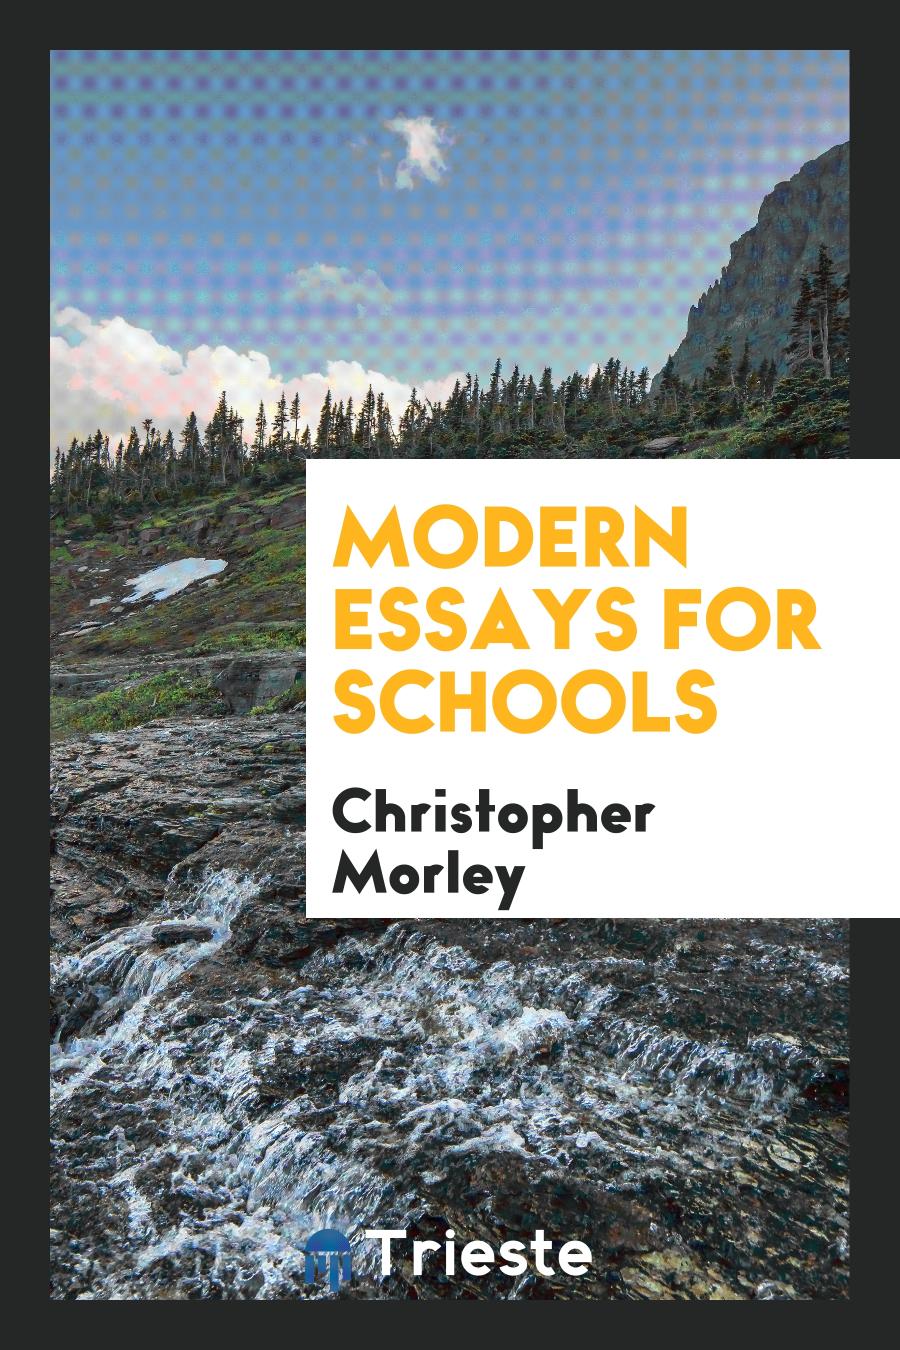 Modern Essays for Schools